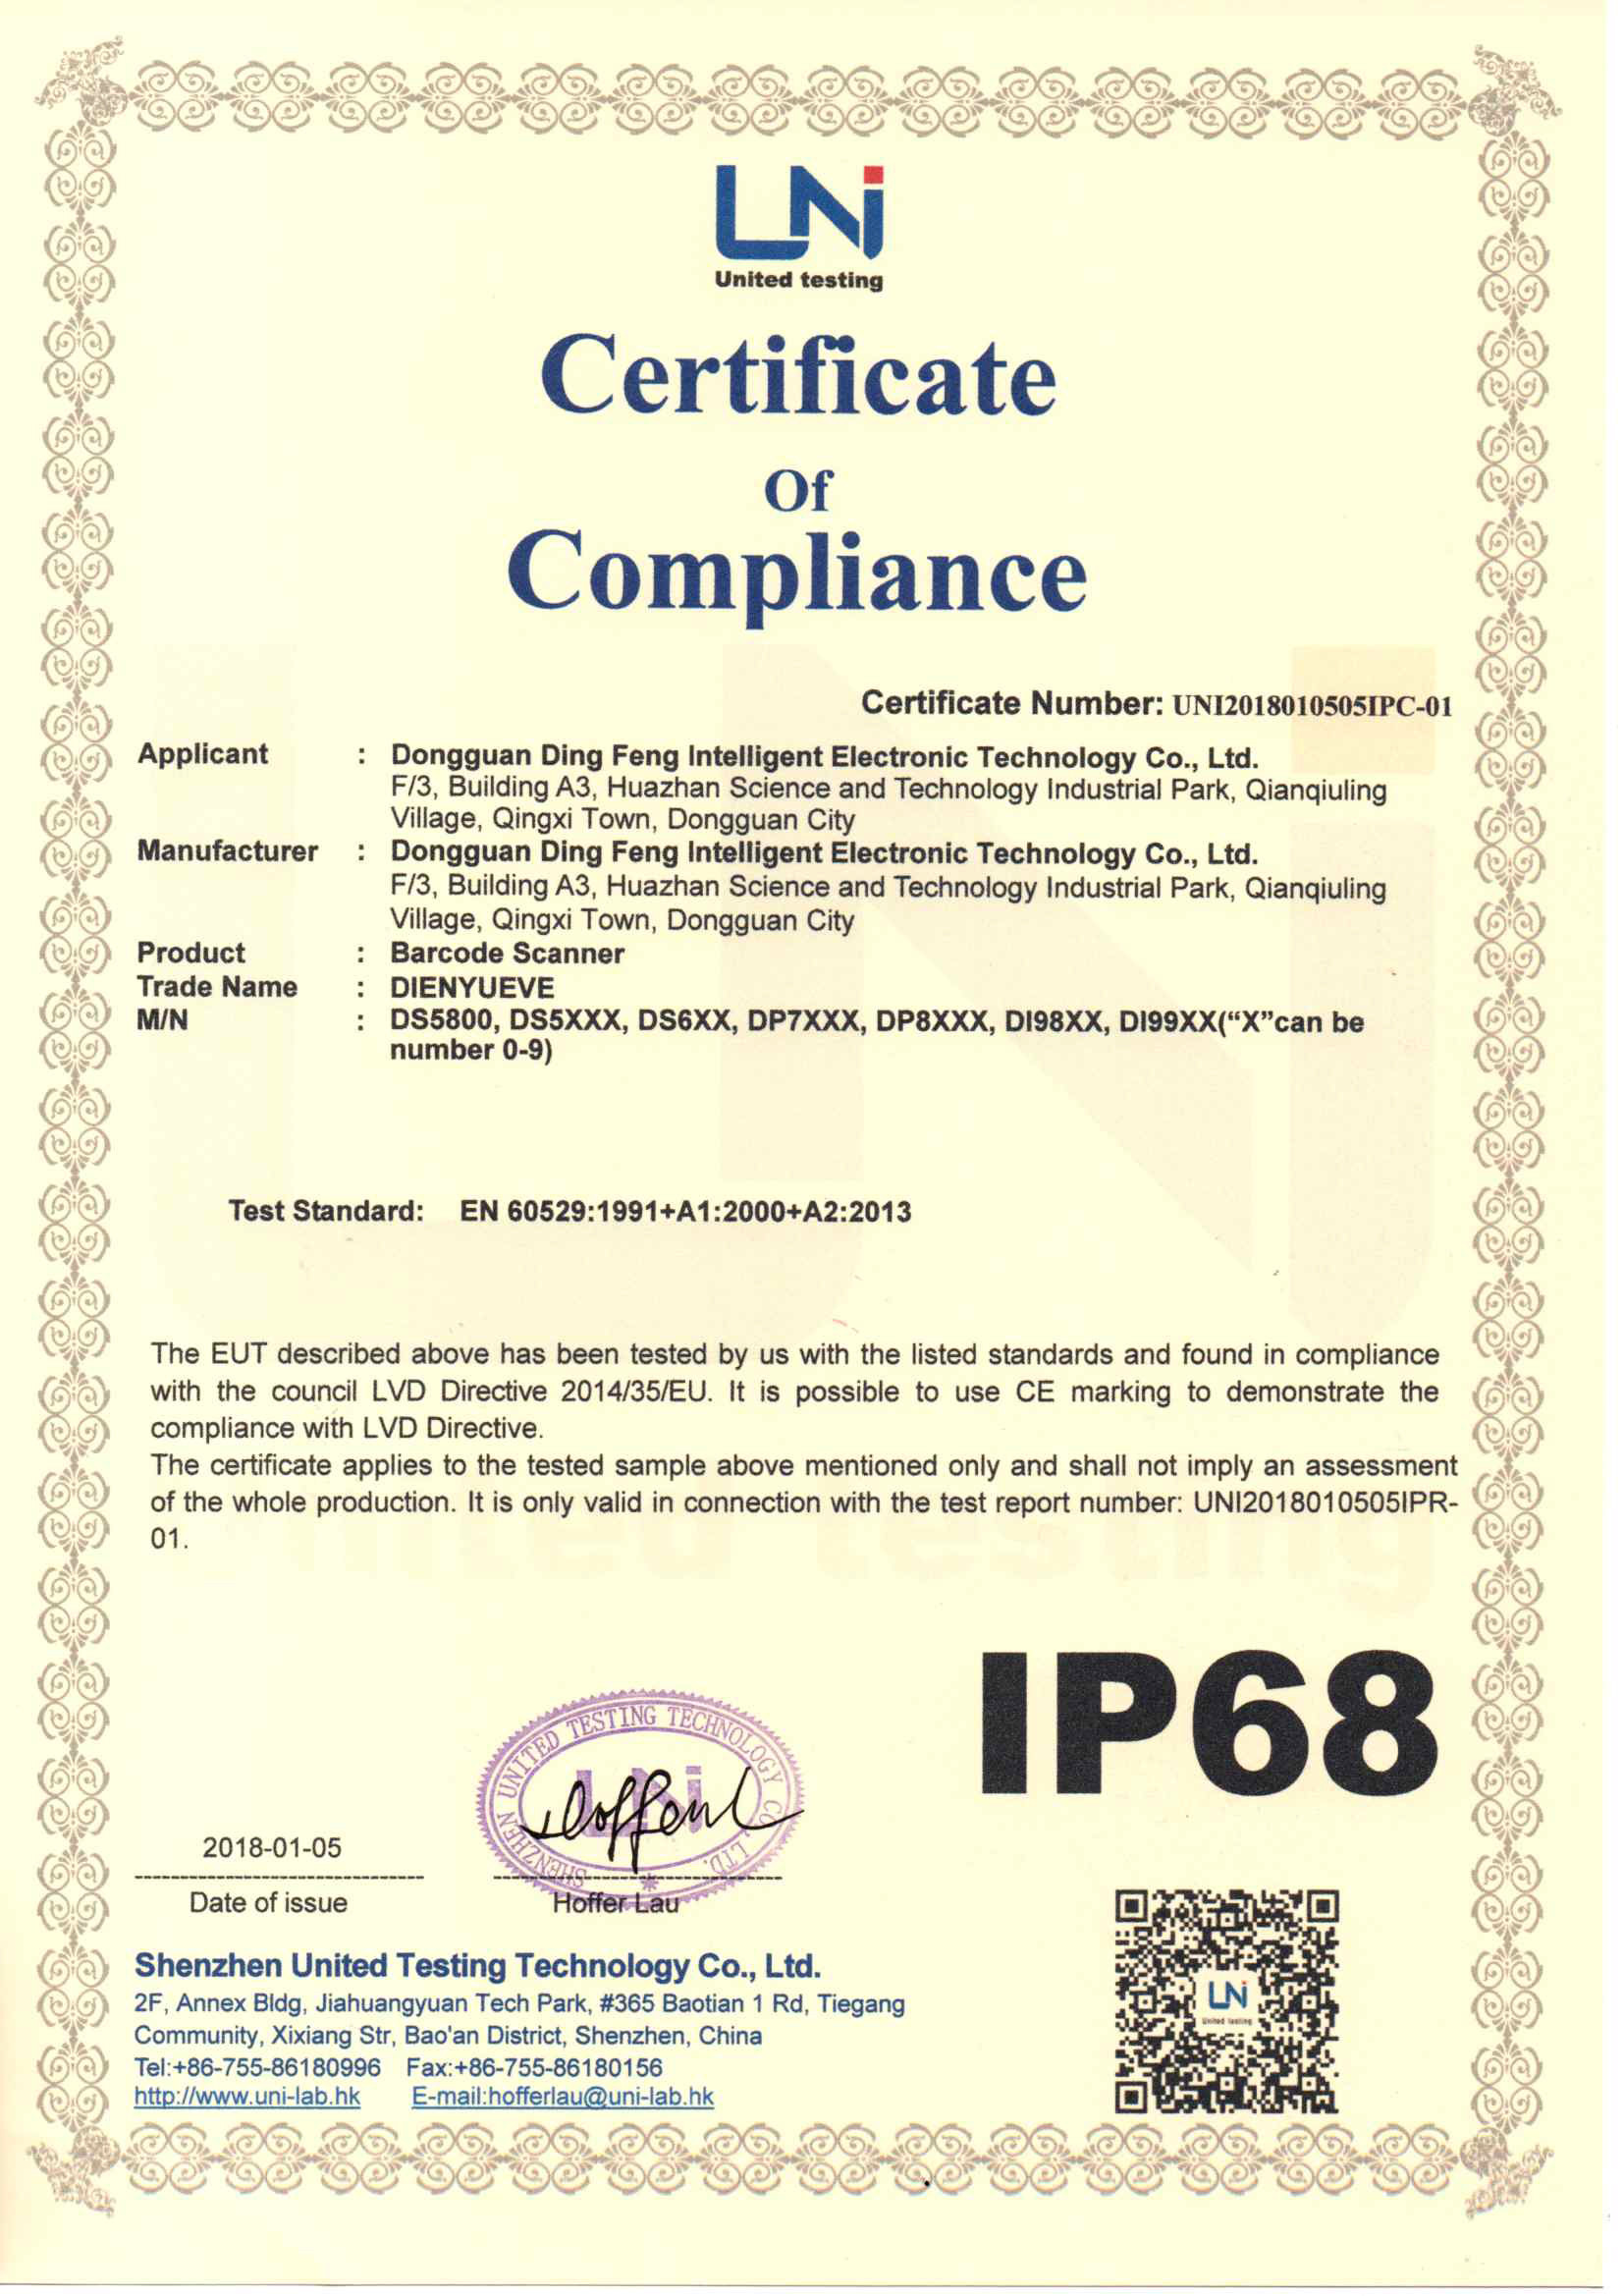 China Shenzhen DYscan Technology Co., Ltd Certificaciones